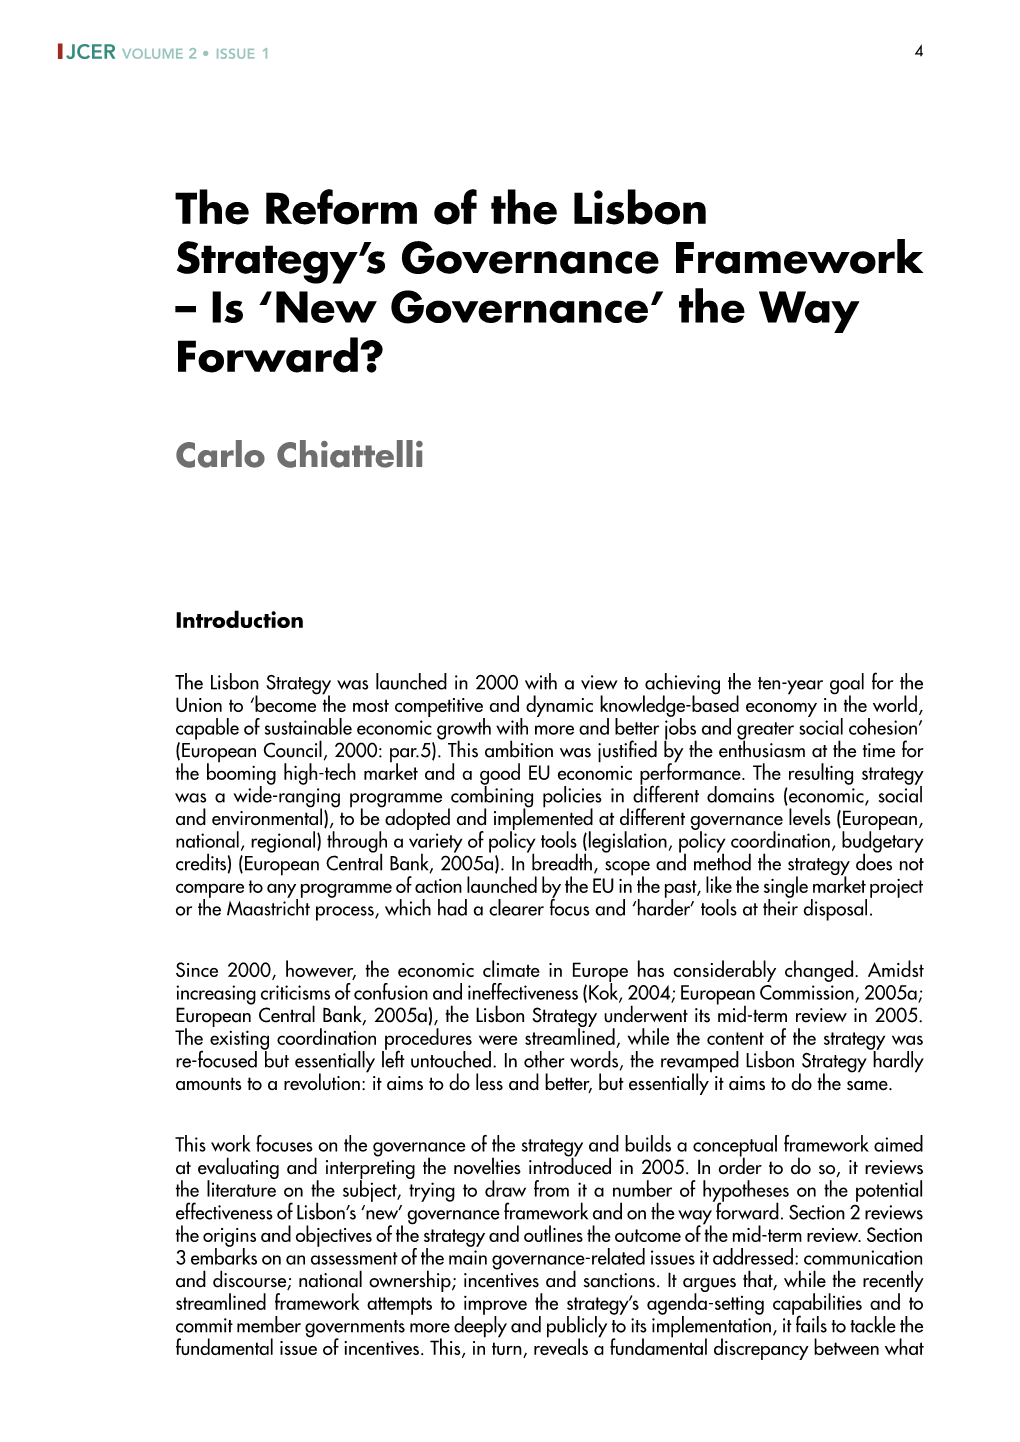 The Reform of the Lisbon Strategy's Governance Framework